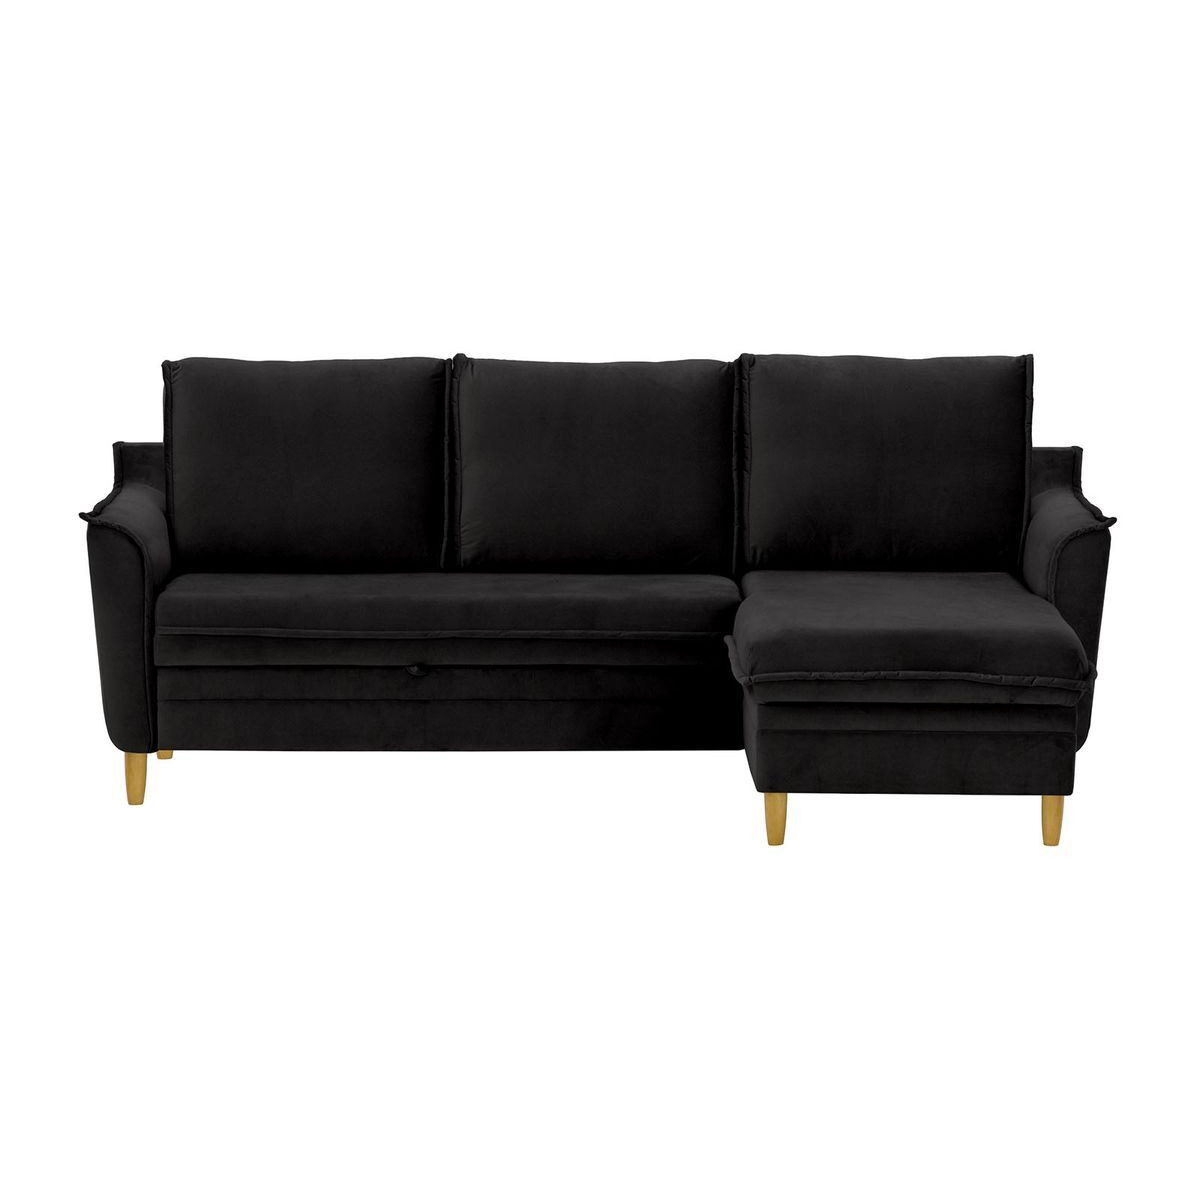 Amour Corner Sofa Bed With Storage, black - image 1